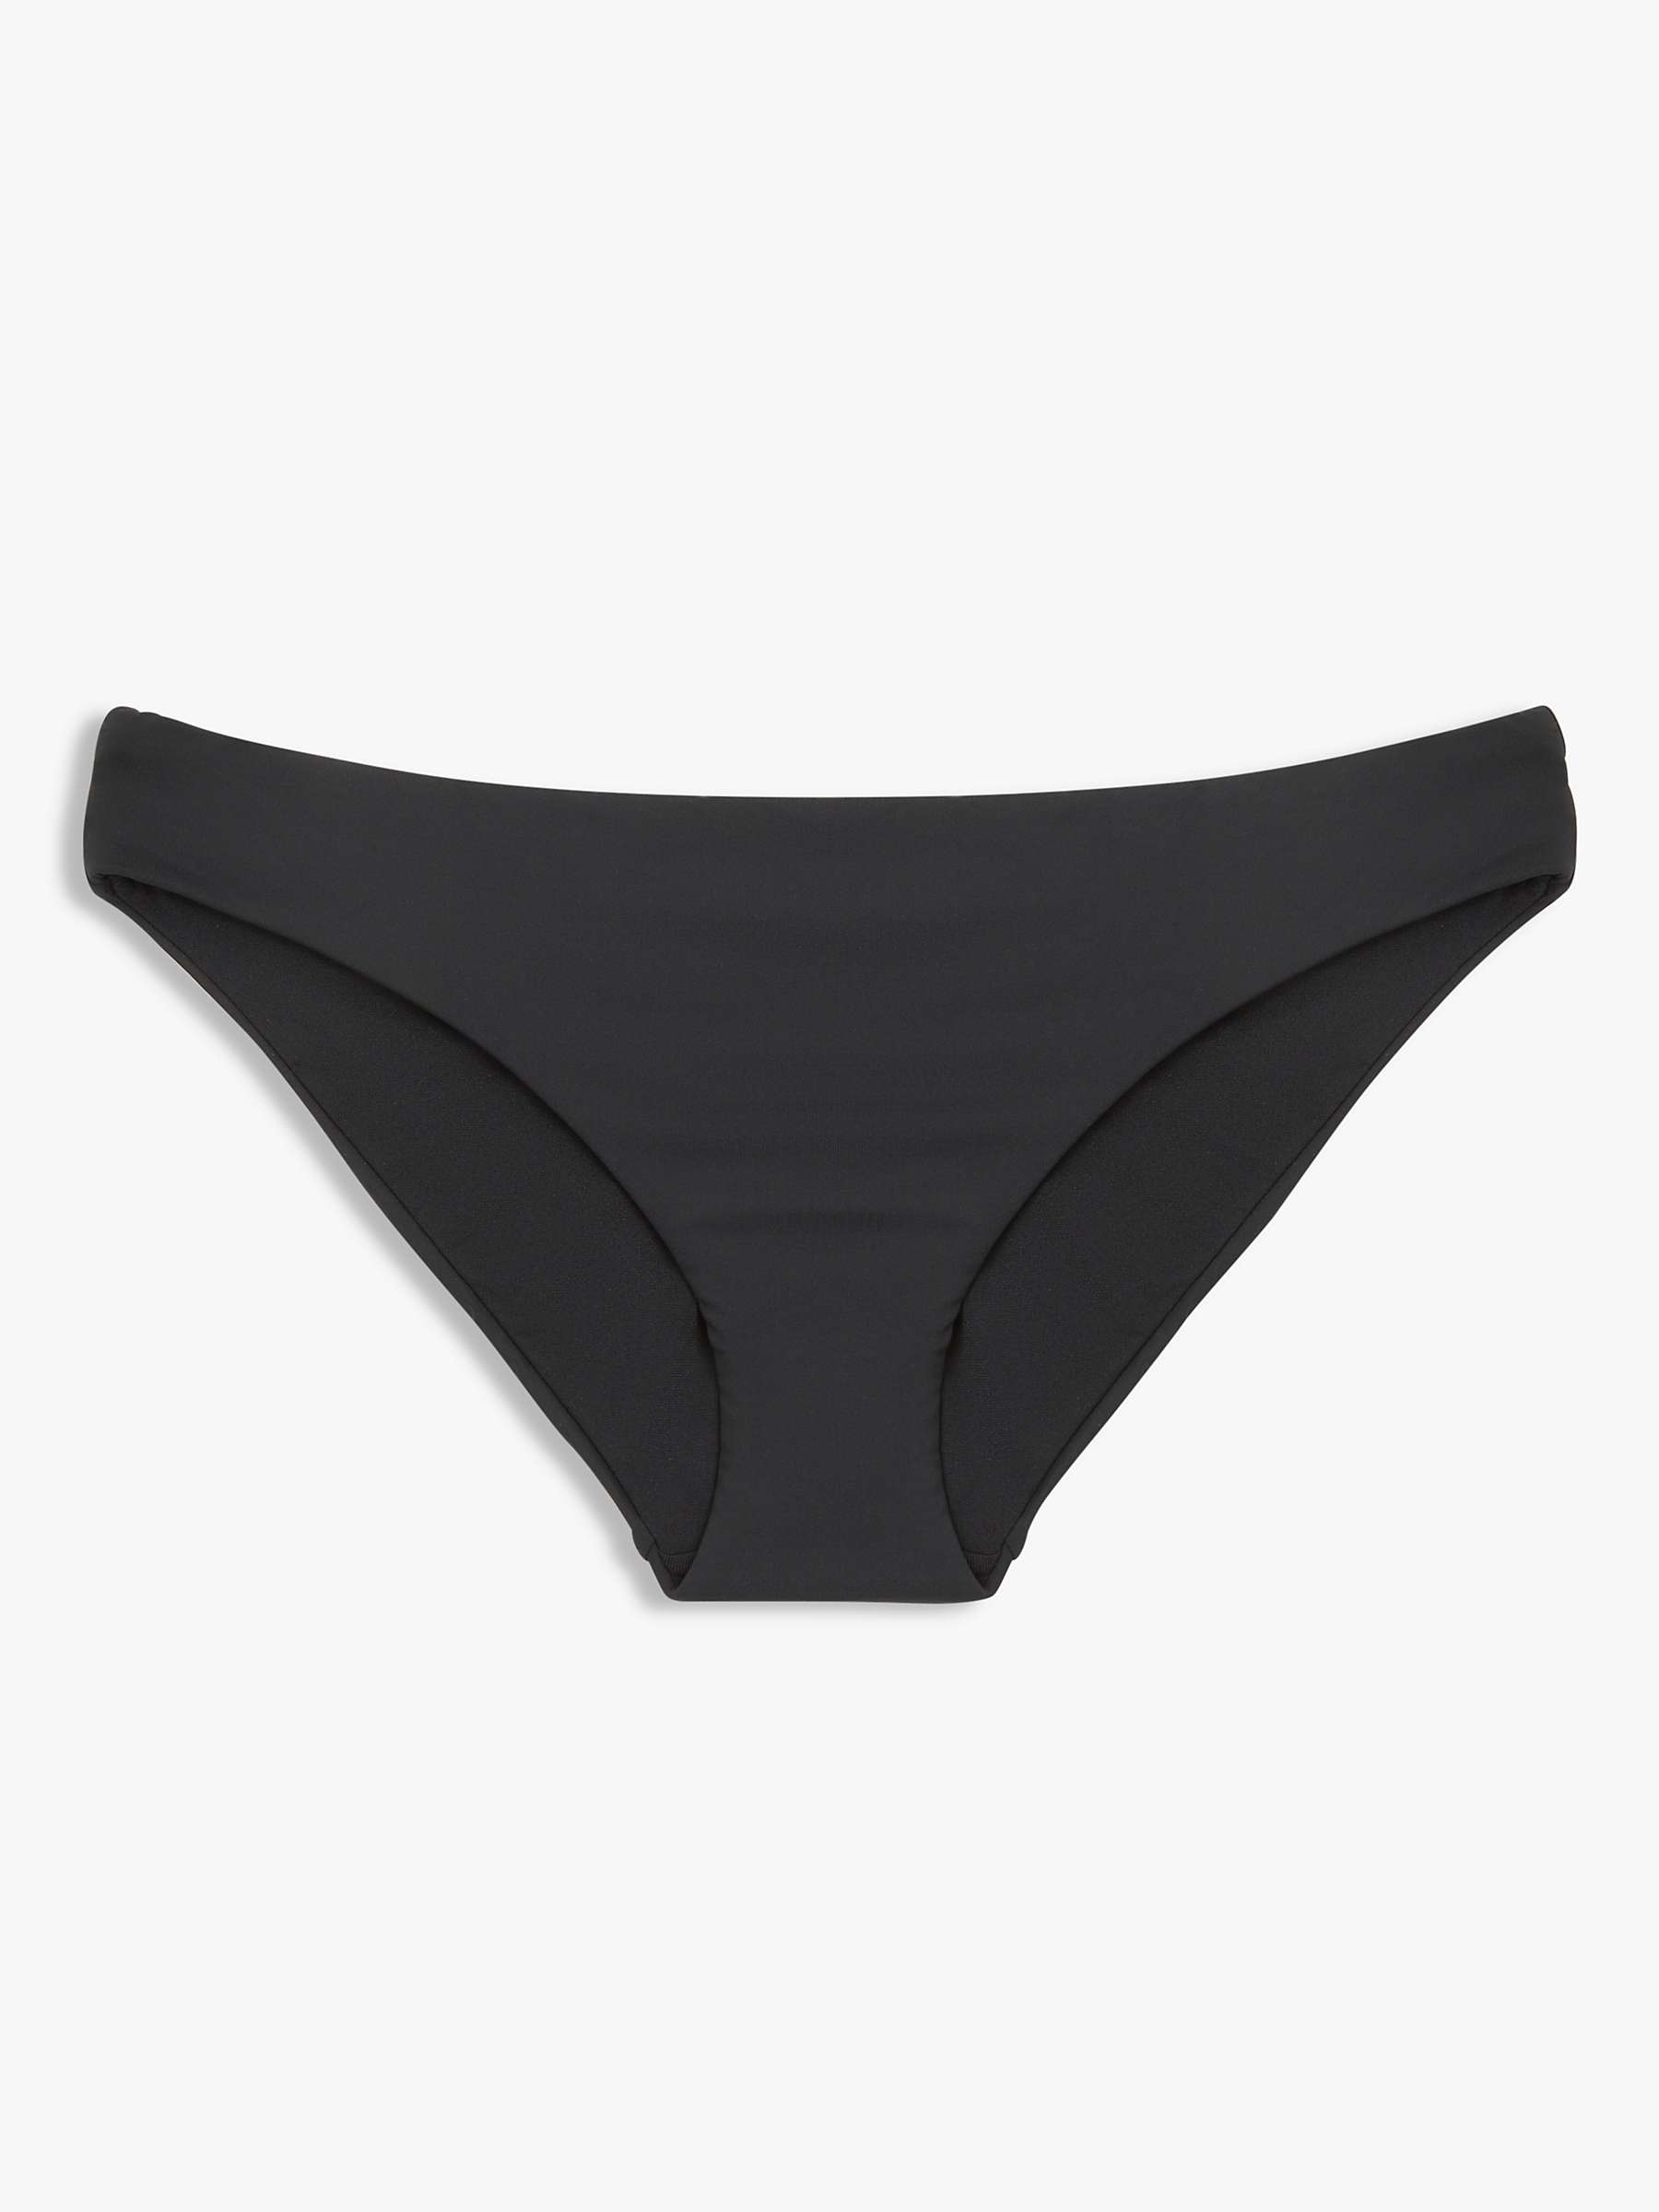 Buy Seafolly Plain Hipster Bikini Bottoms, Black Online at johnlewis.com